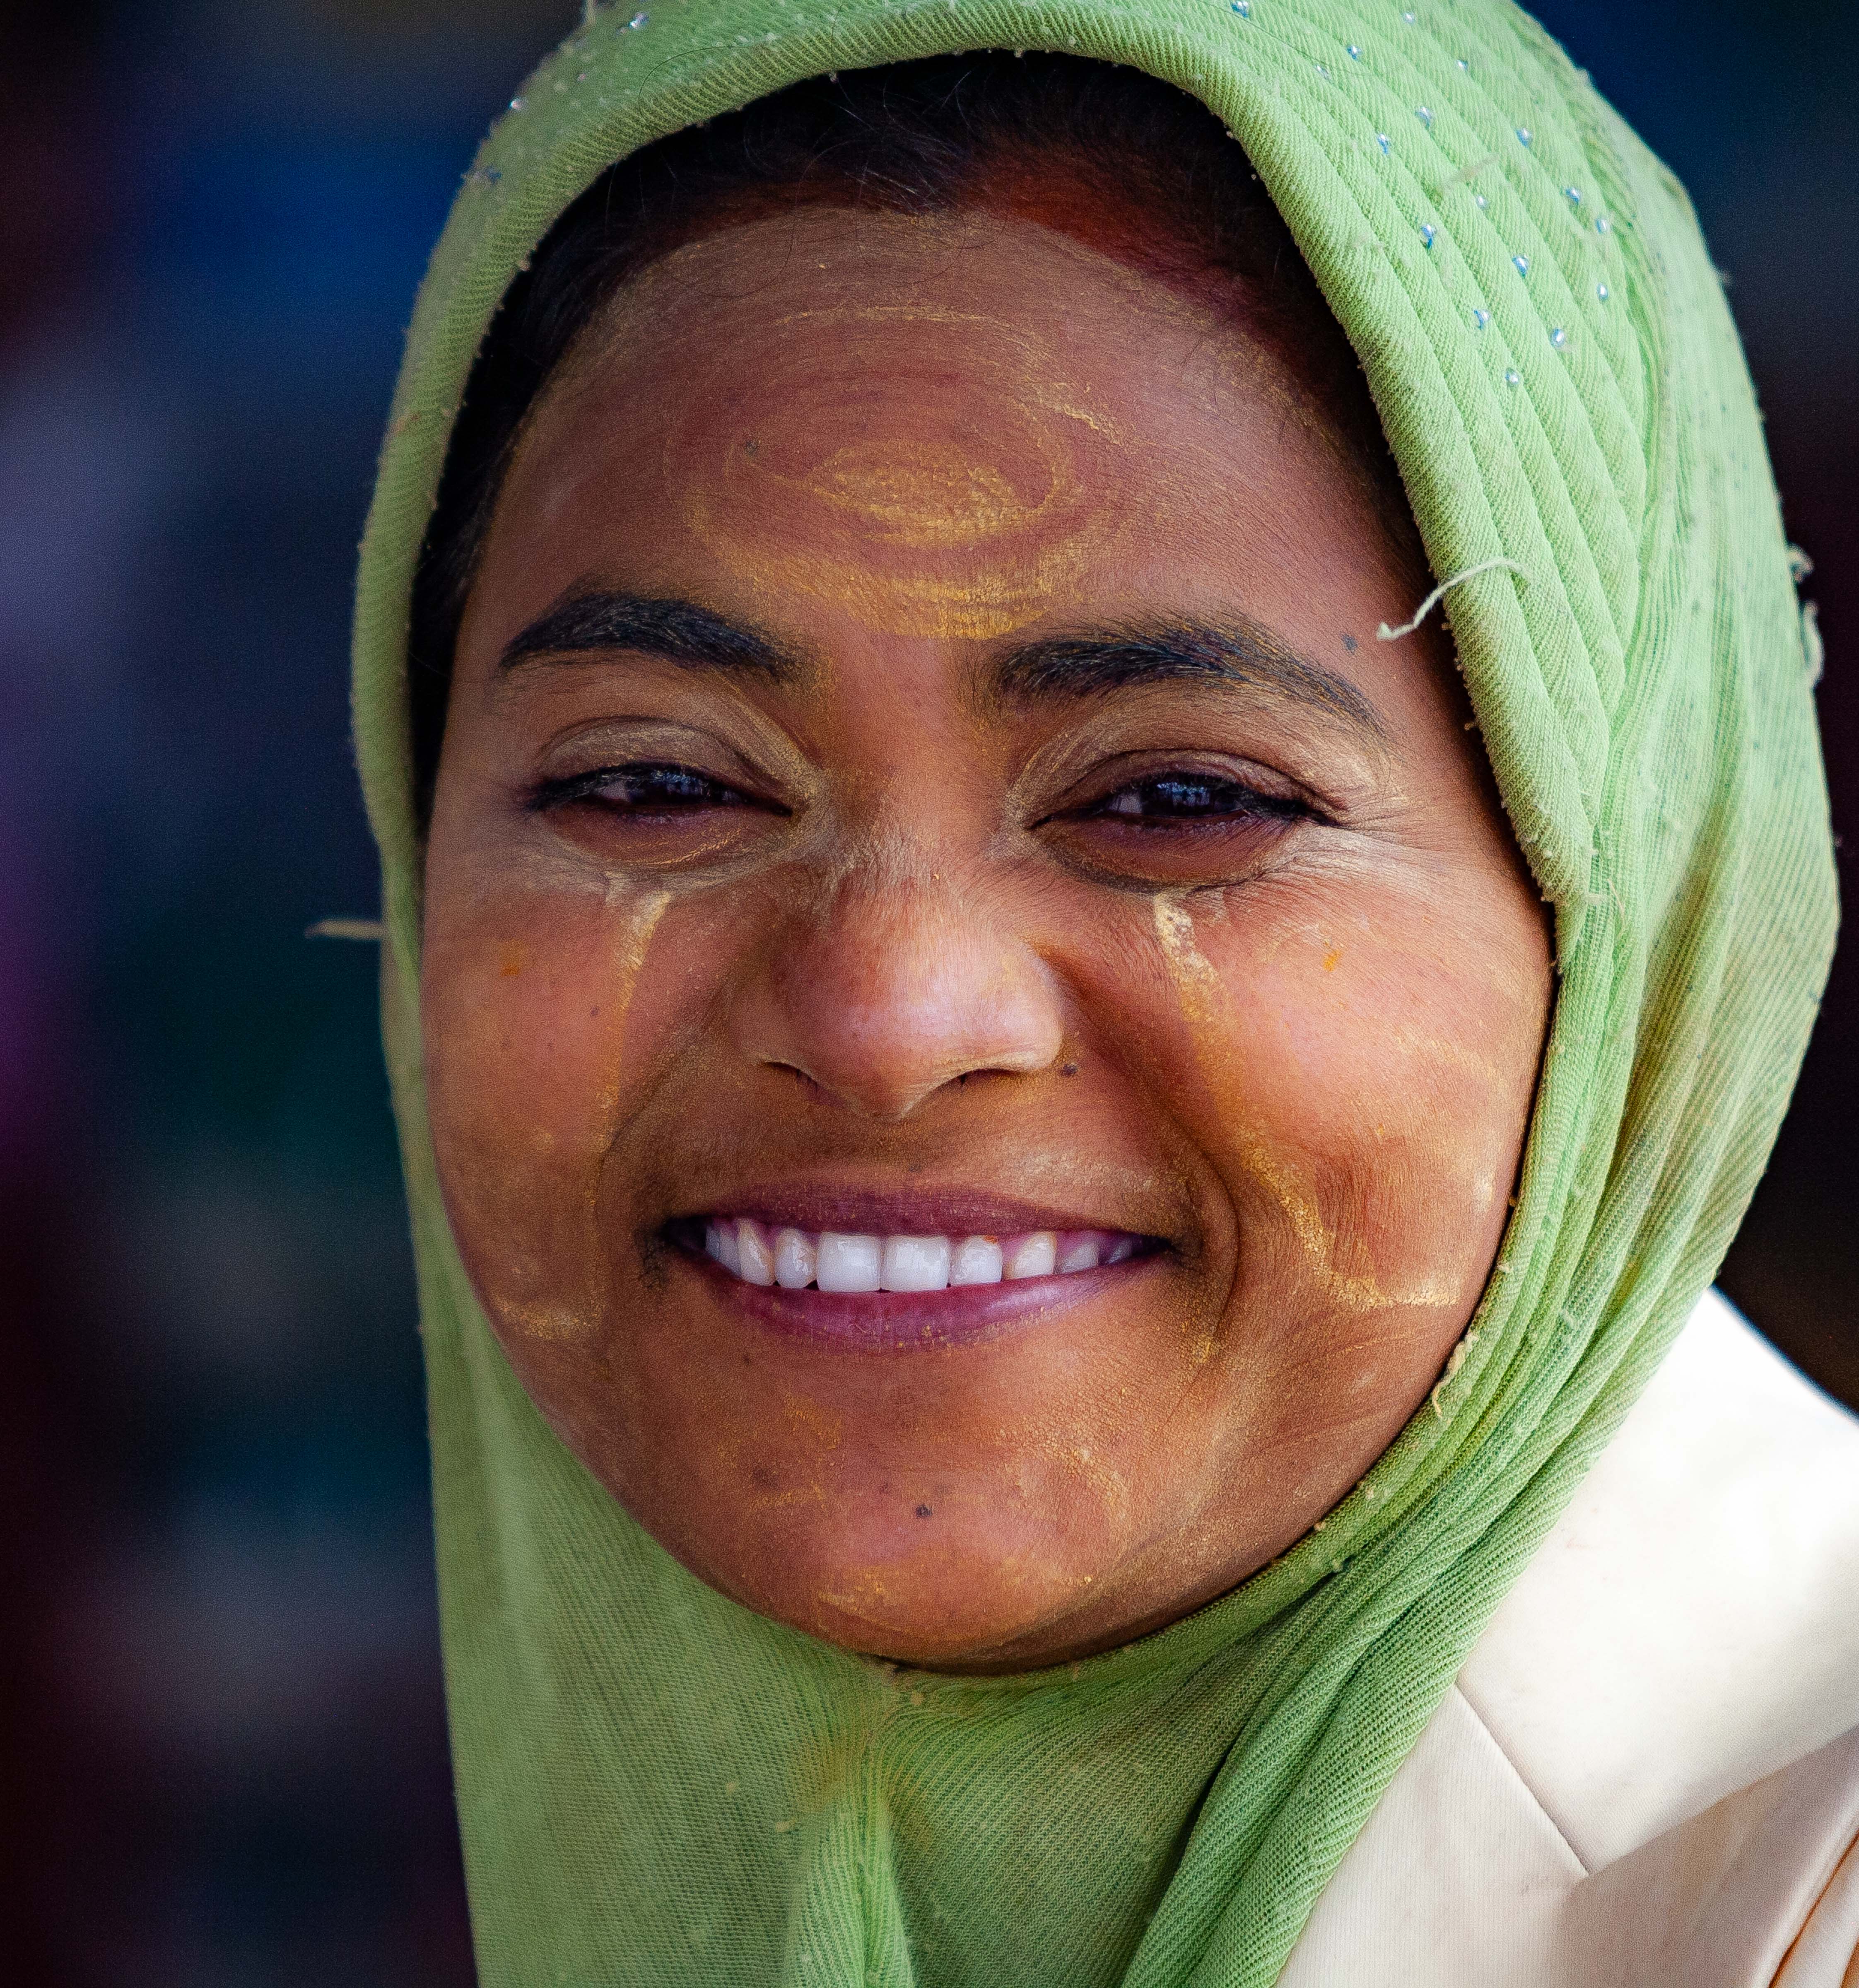 Myanmar, Tanintharyi Prov, Portrait Of A Woman, 2008, IMG 2701